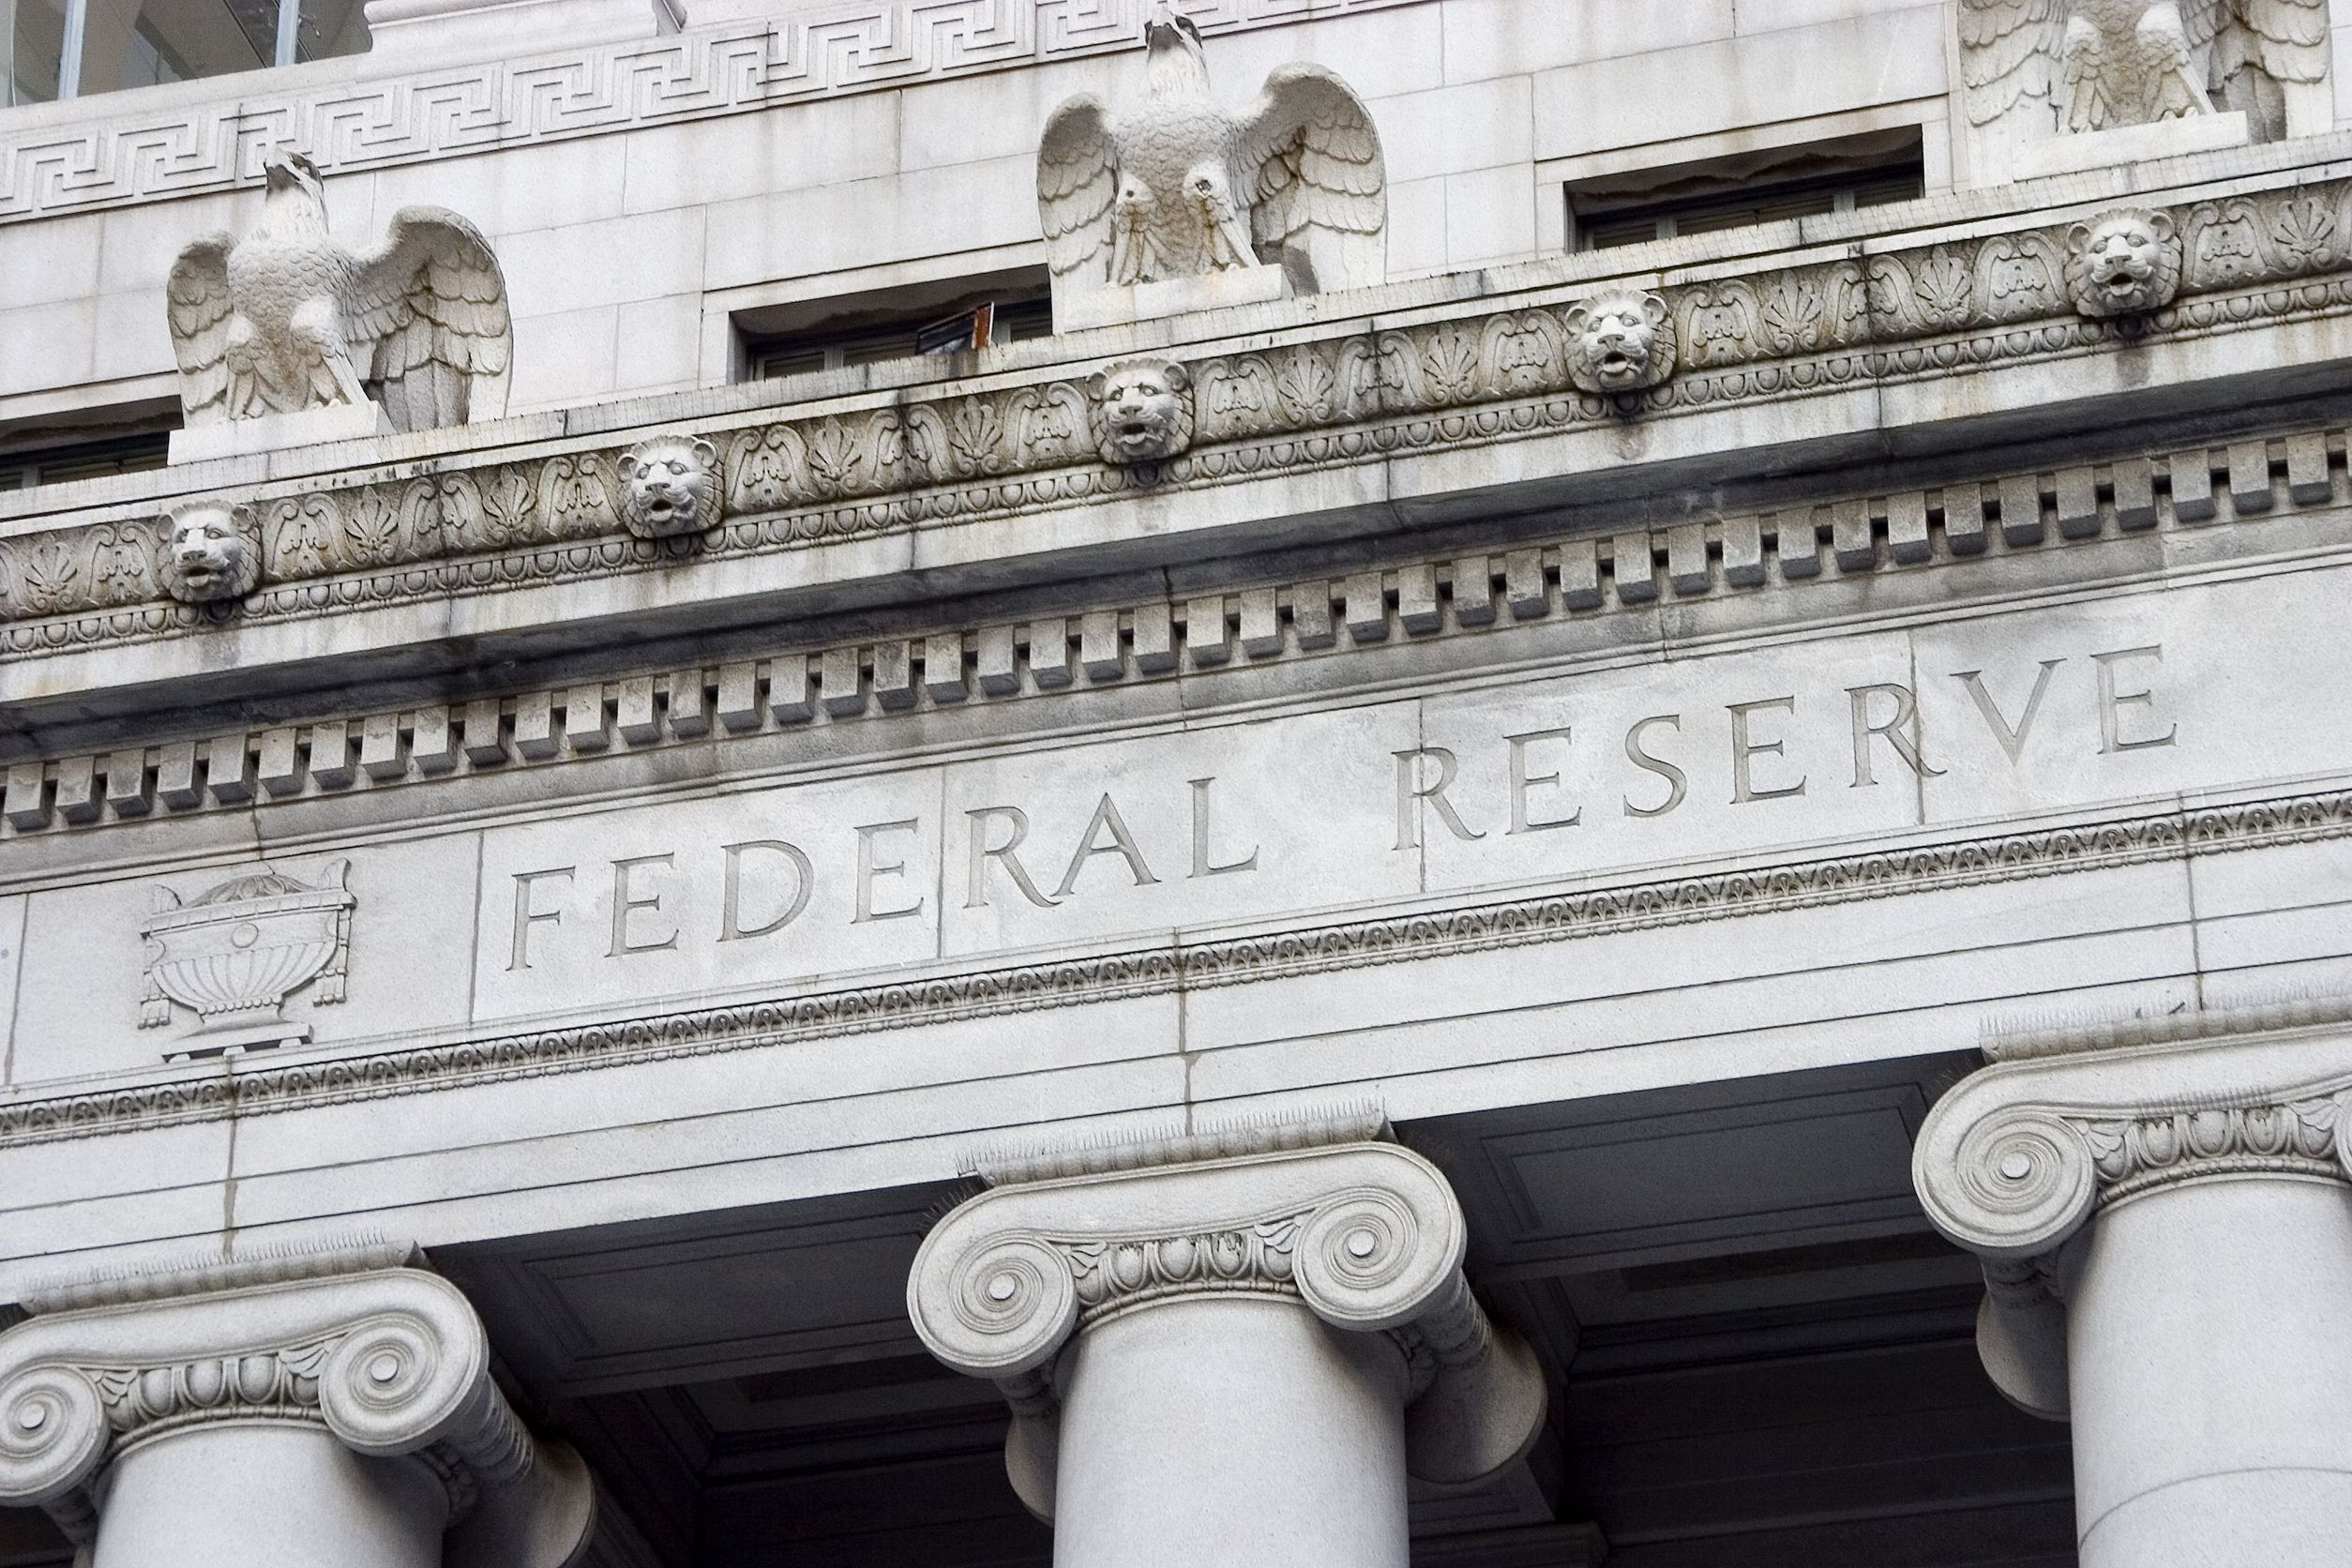 Federal Reserve under growing pressure to reform system, goals